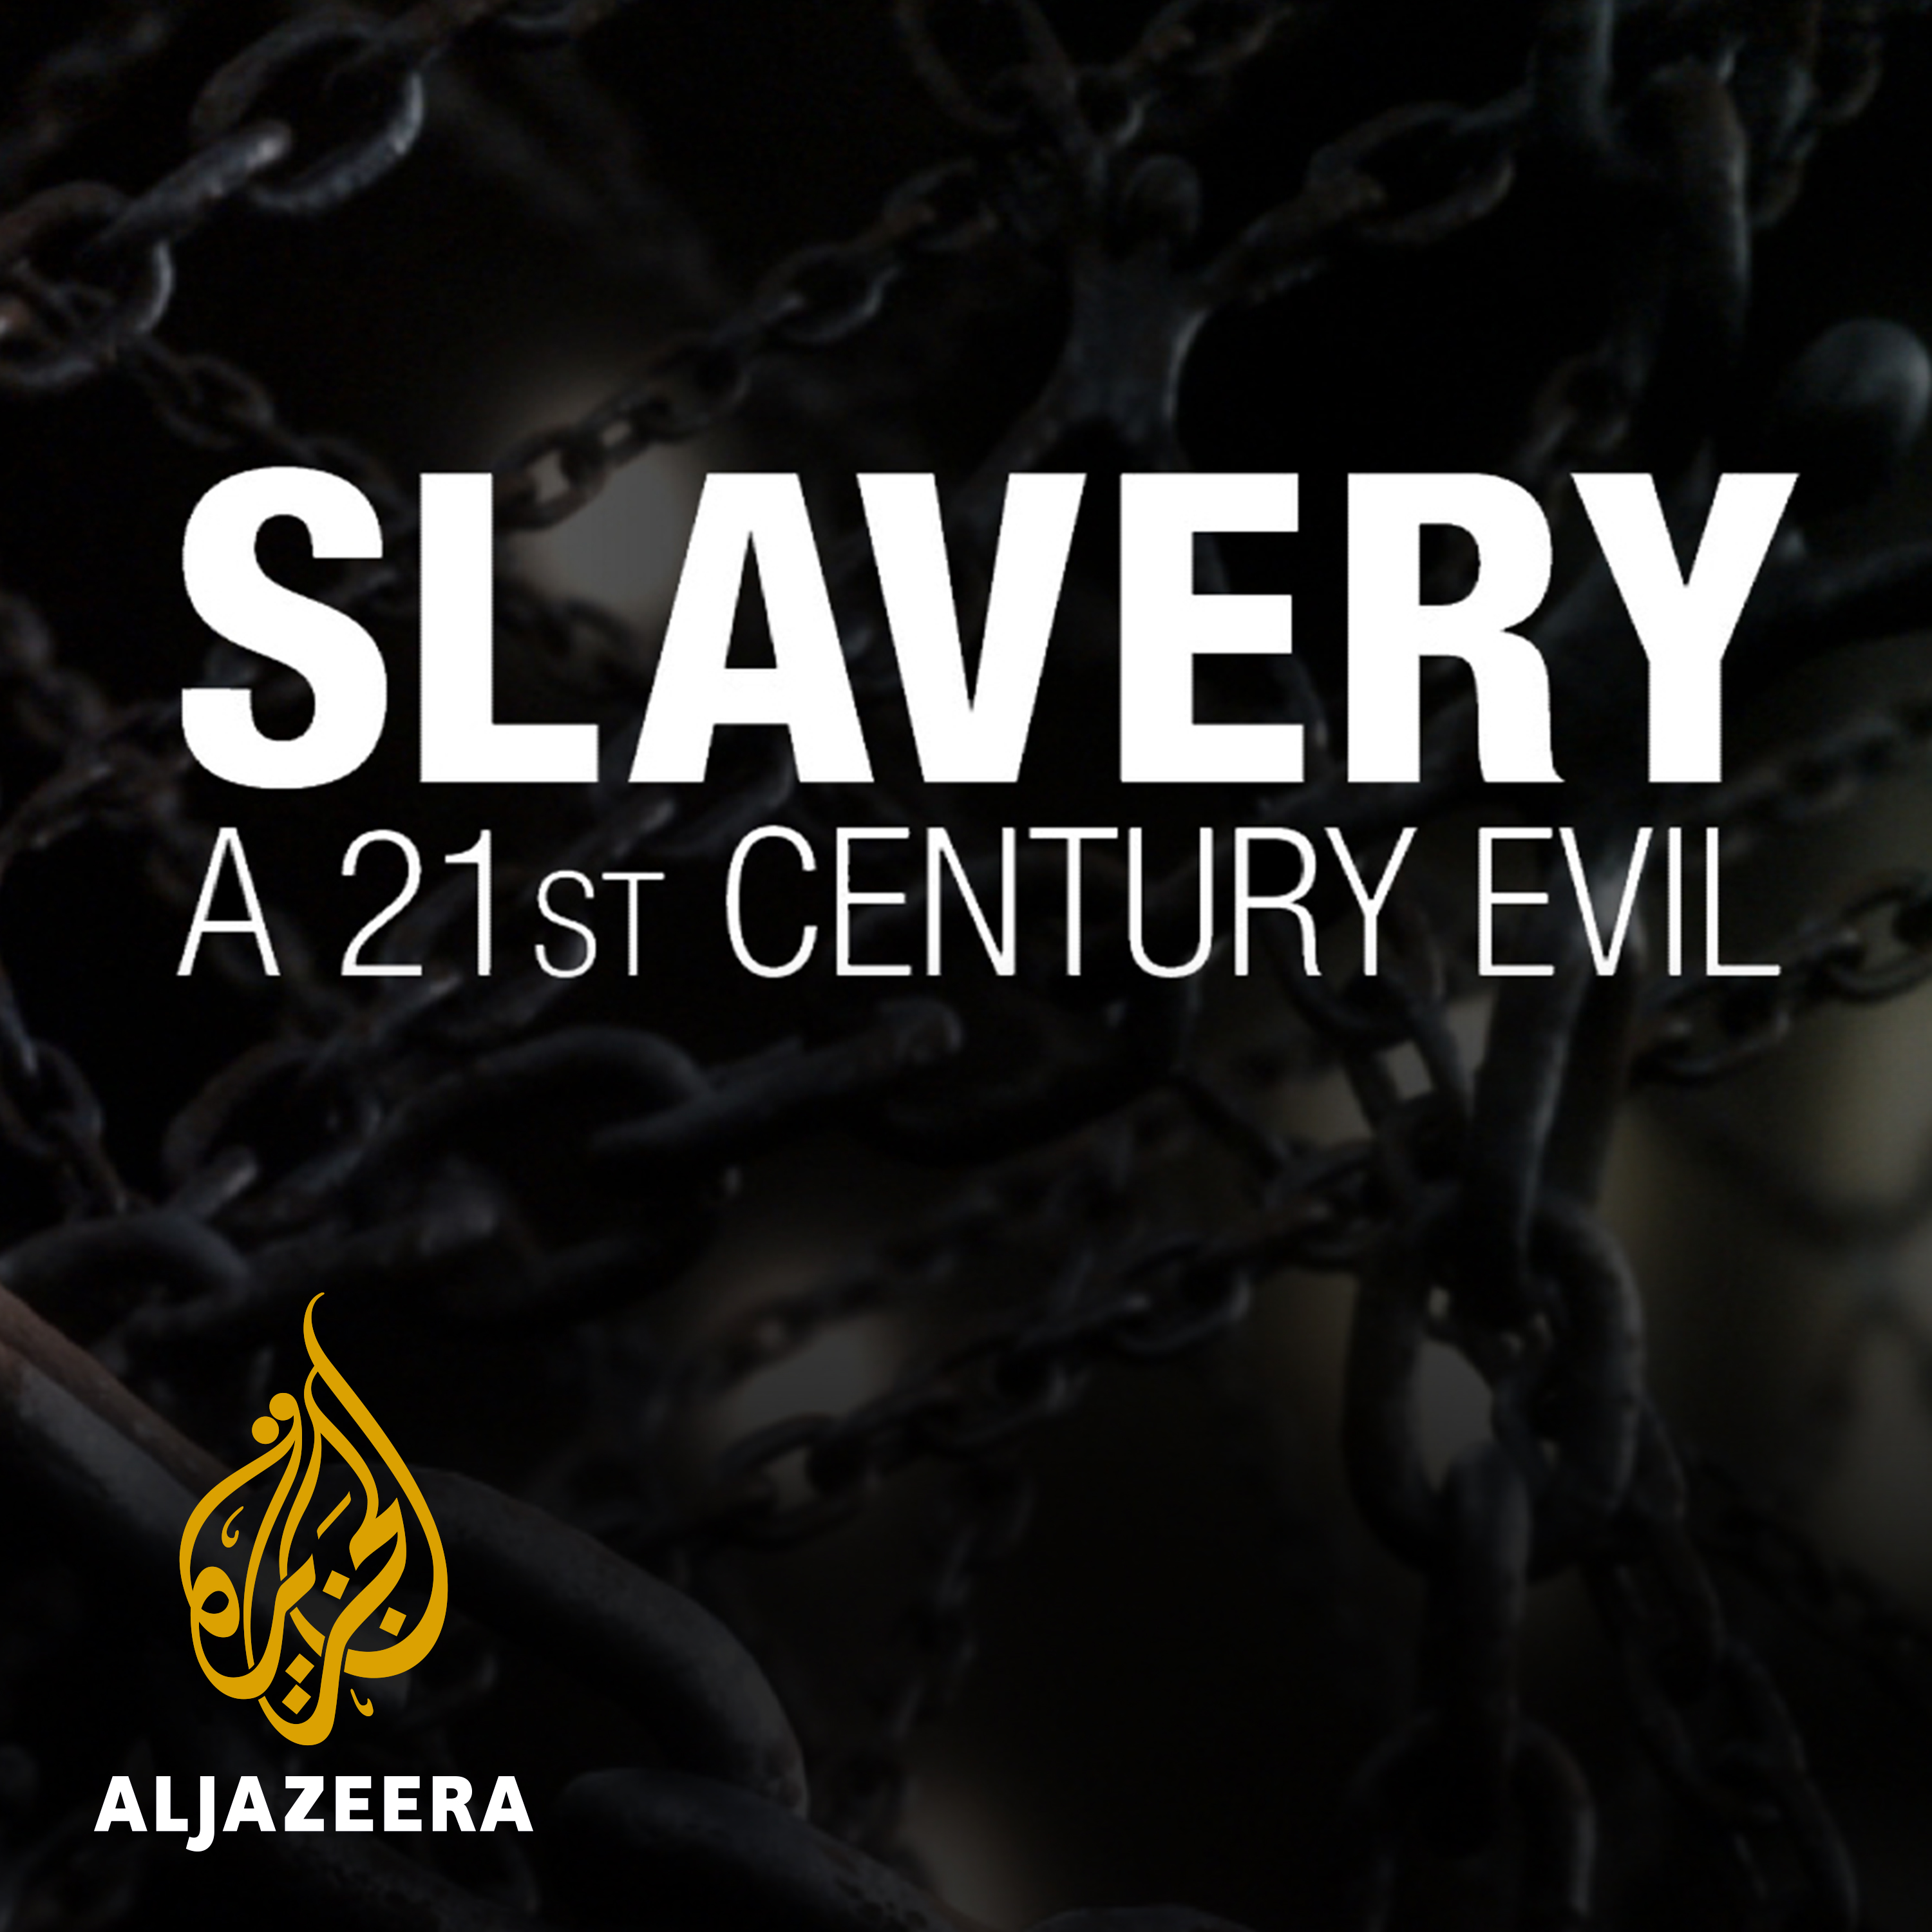 Slavery: A 21st Century Evil